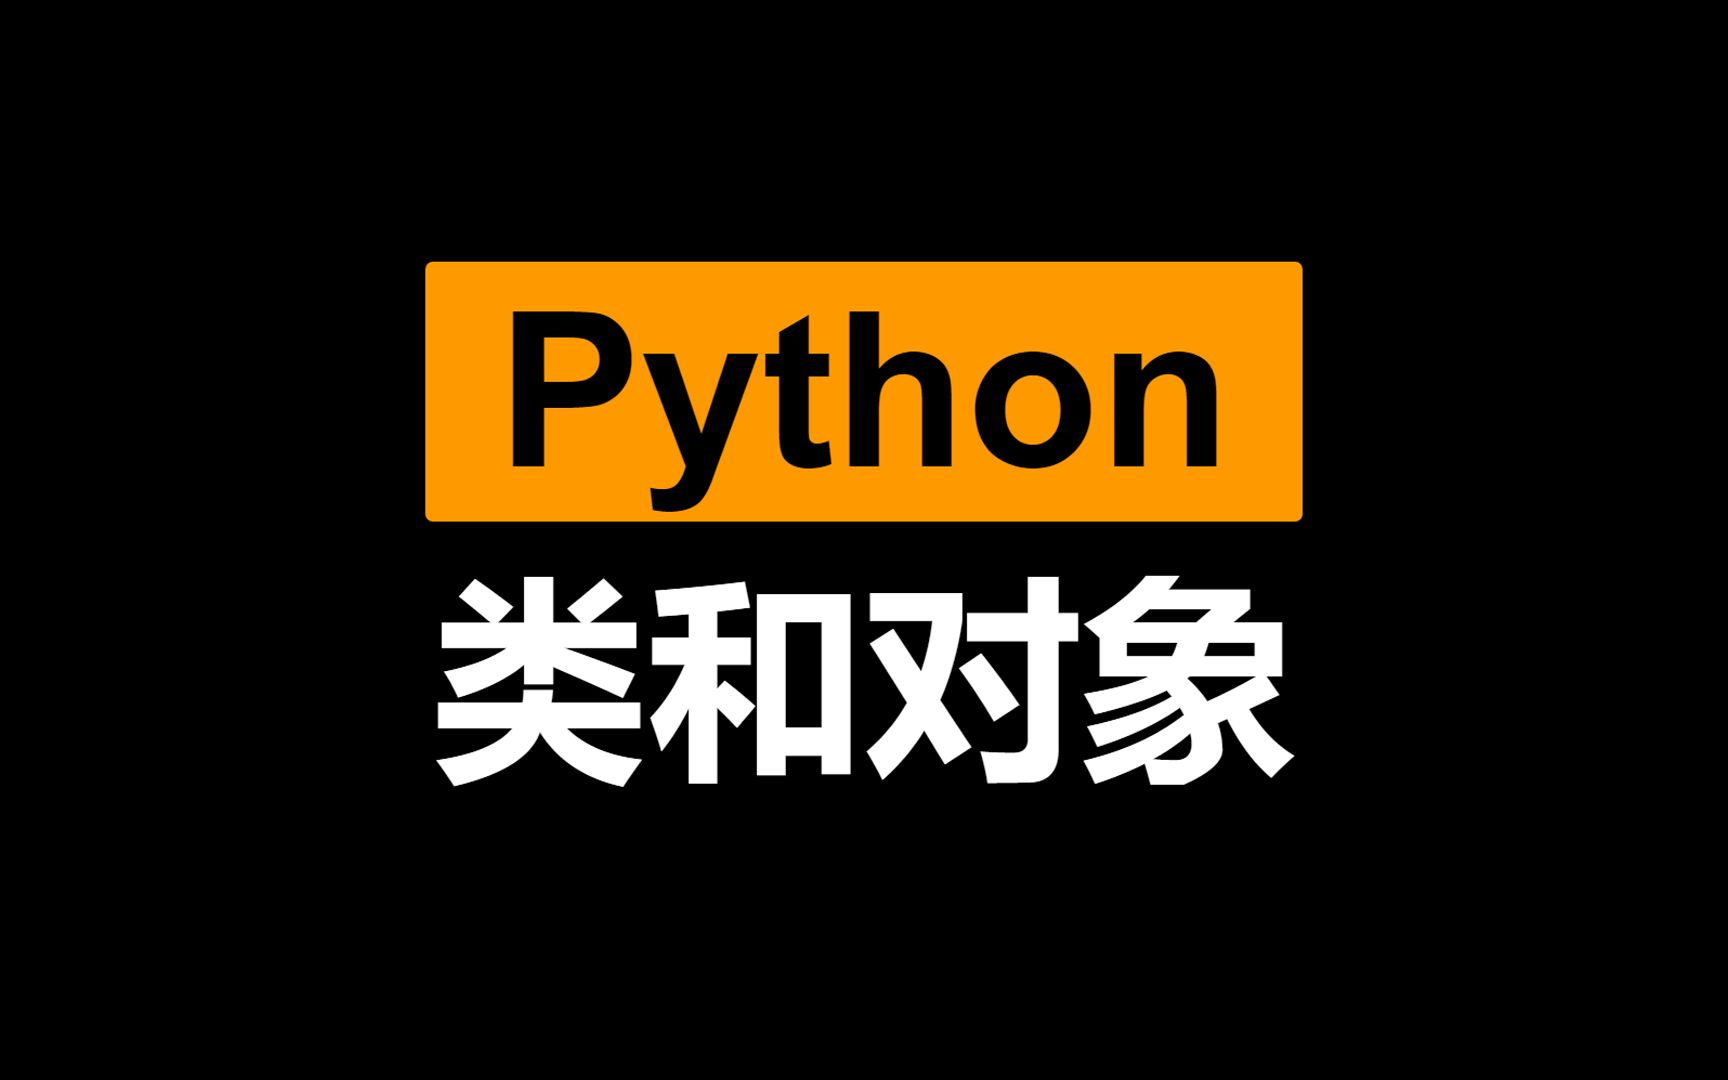 Python入门教程：掌握for循环、while循环、字符串操作、文件读写与异常处理等基础知识